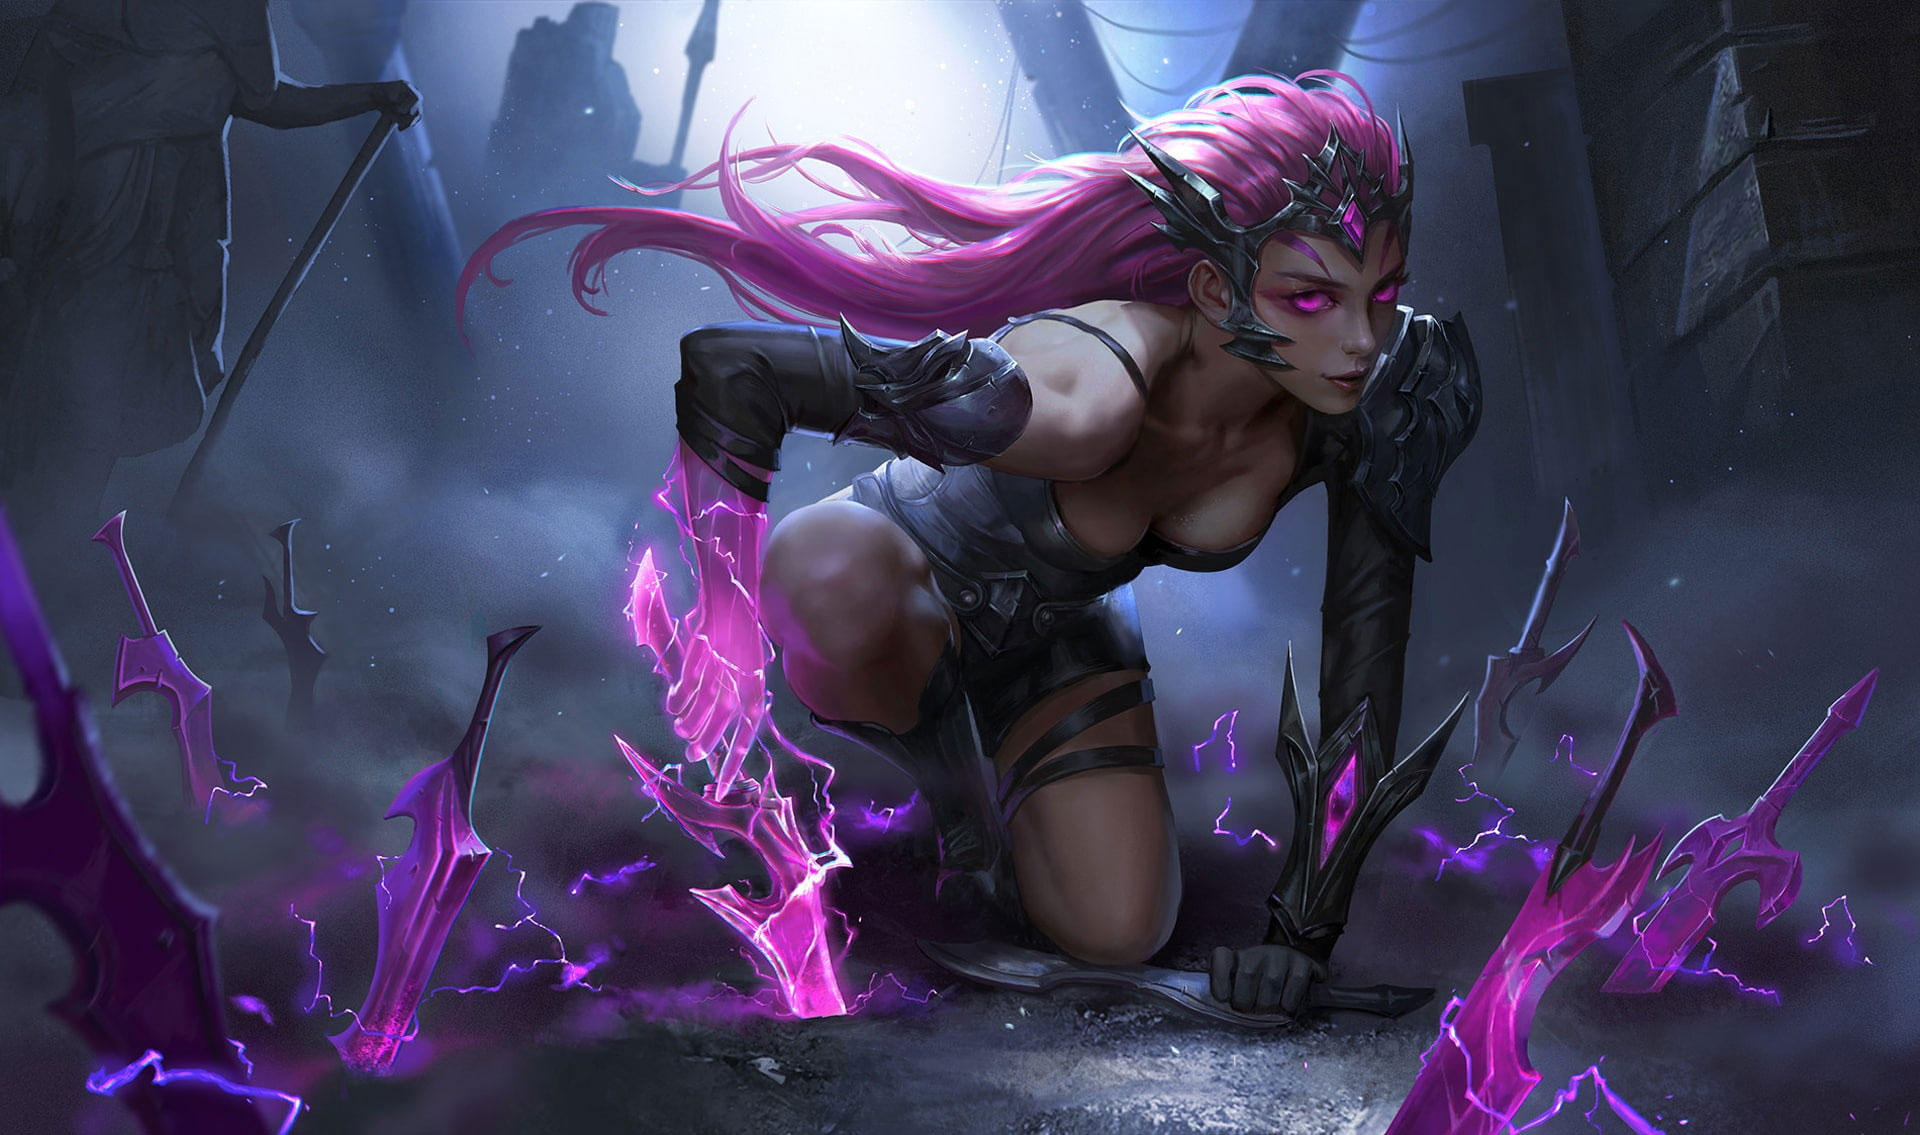 Dark girl fantasy wallpaper, cleavage, pink hair, armor, Warrior, weapons